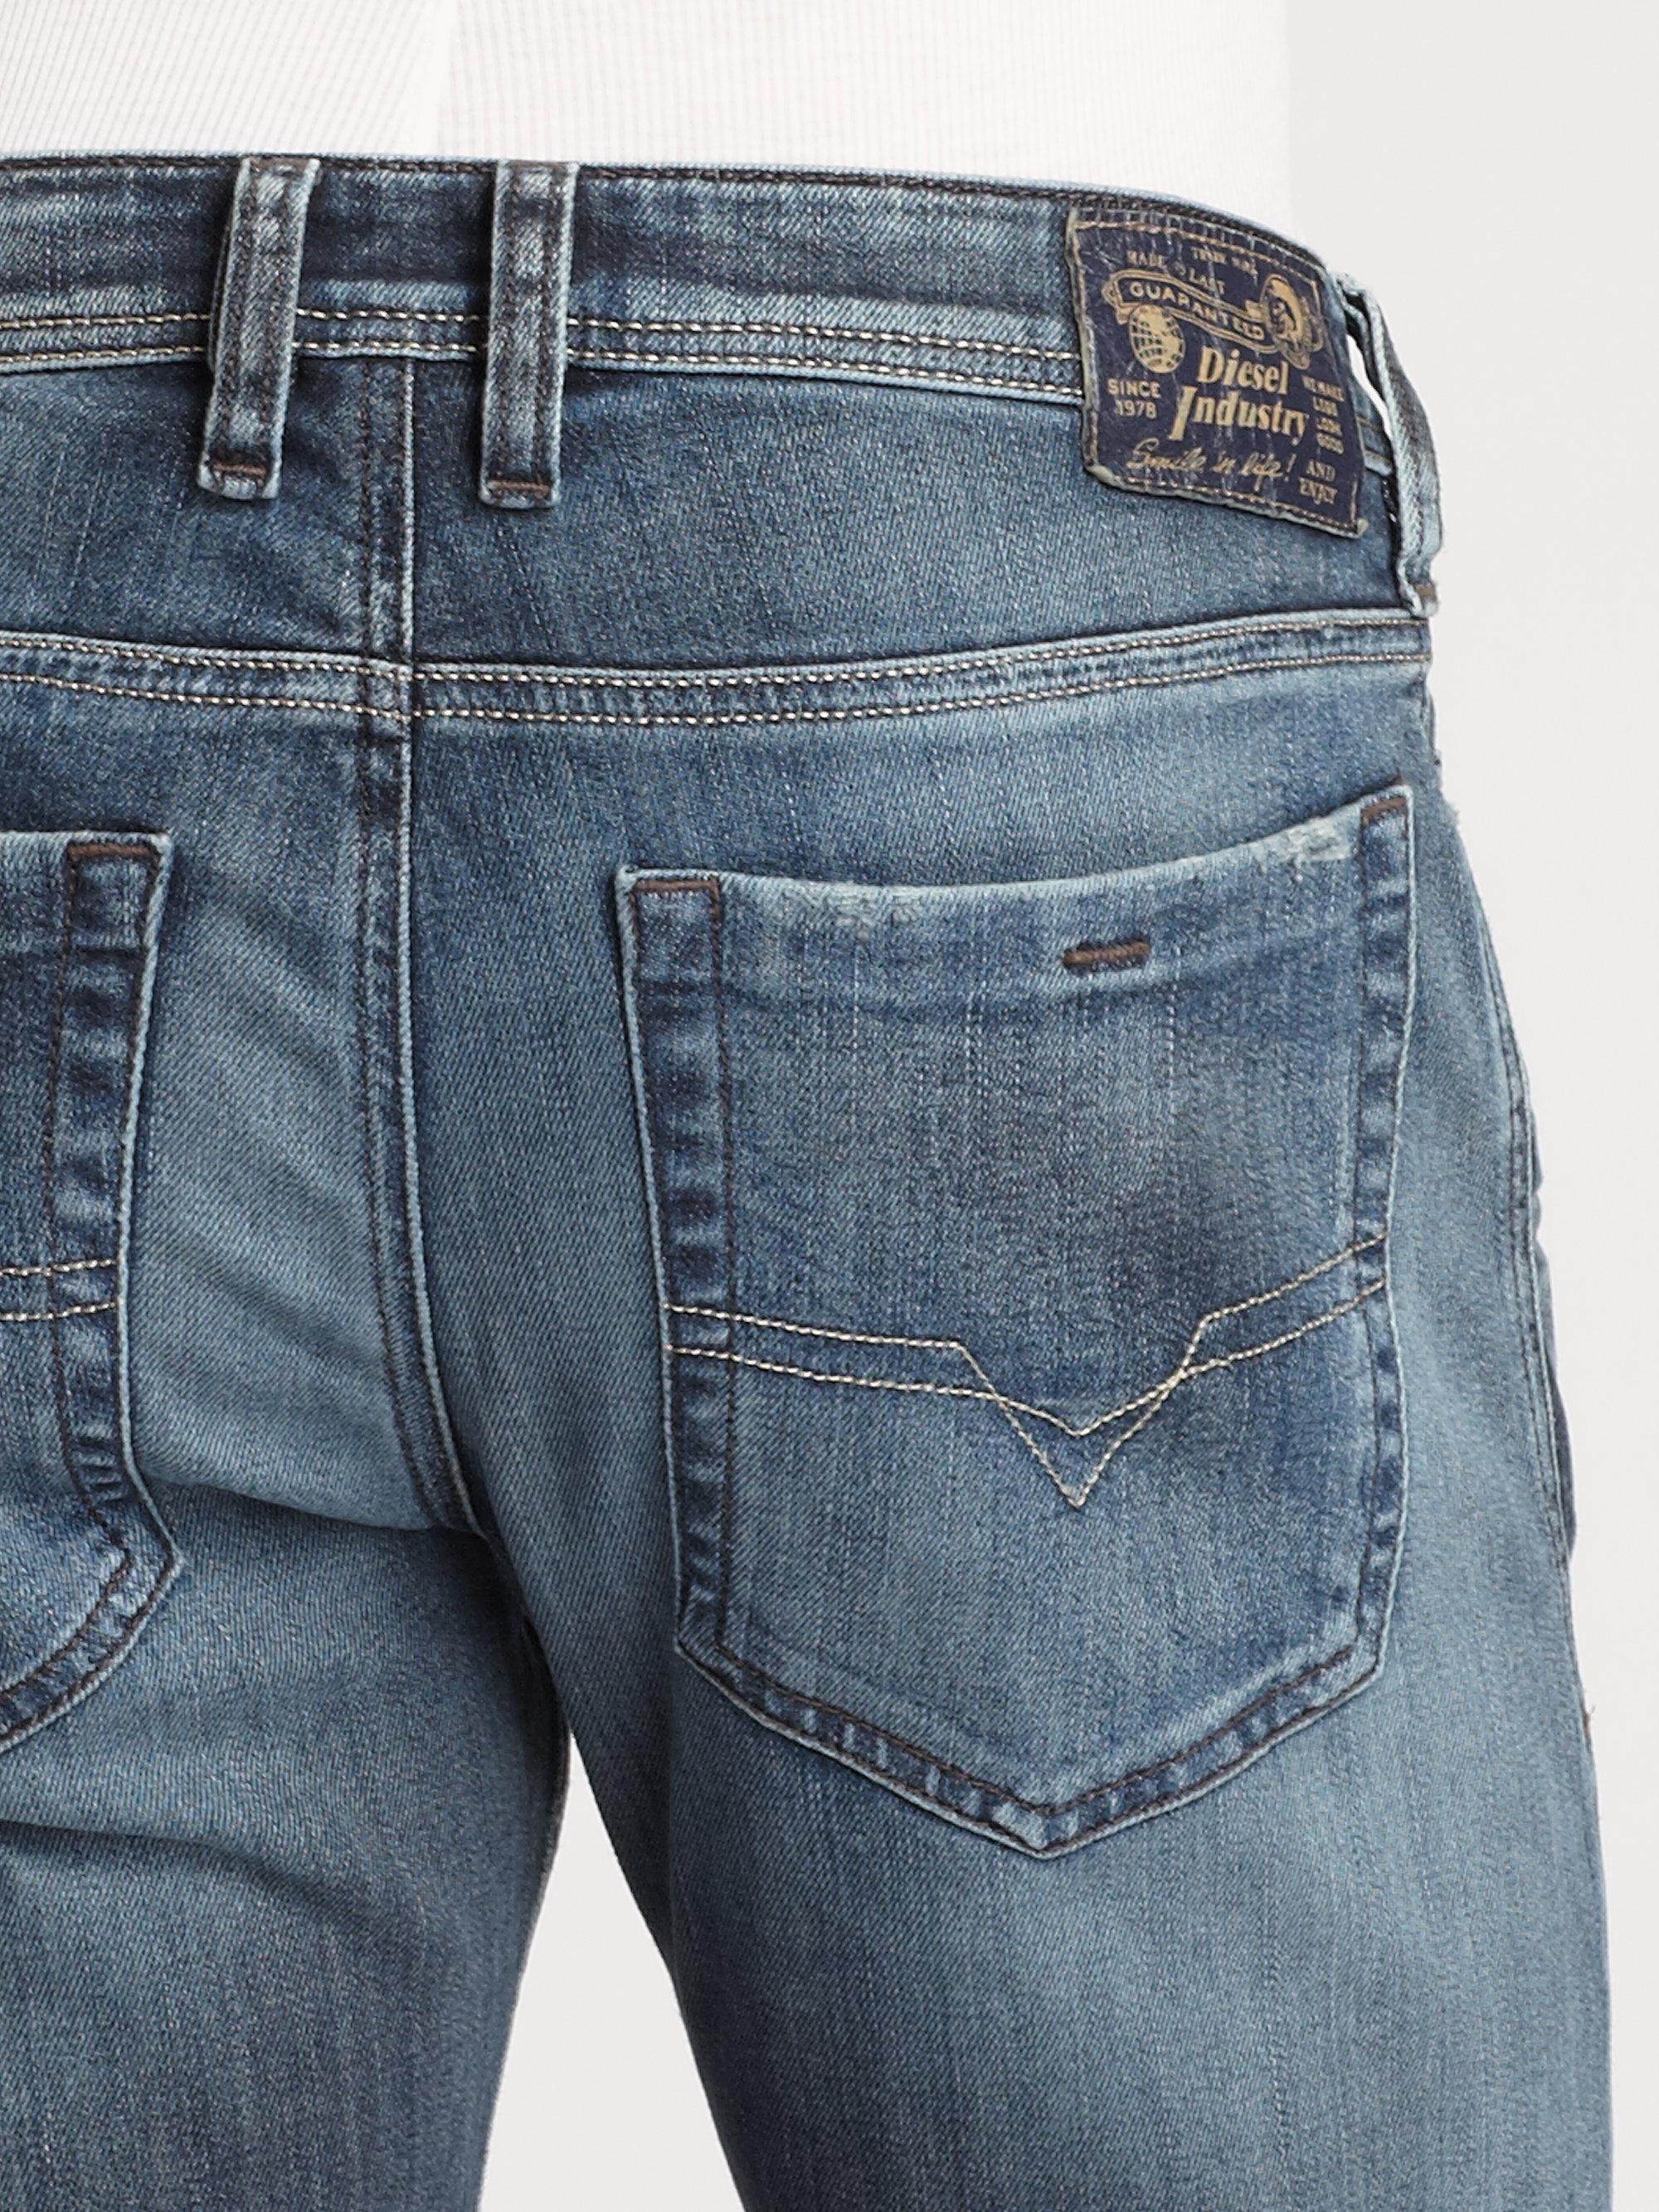 DIESEL Zathan Bootcut Jeans in Blue for Men - Lyst